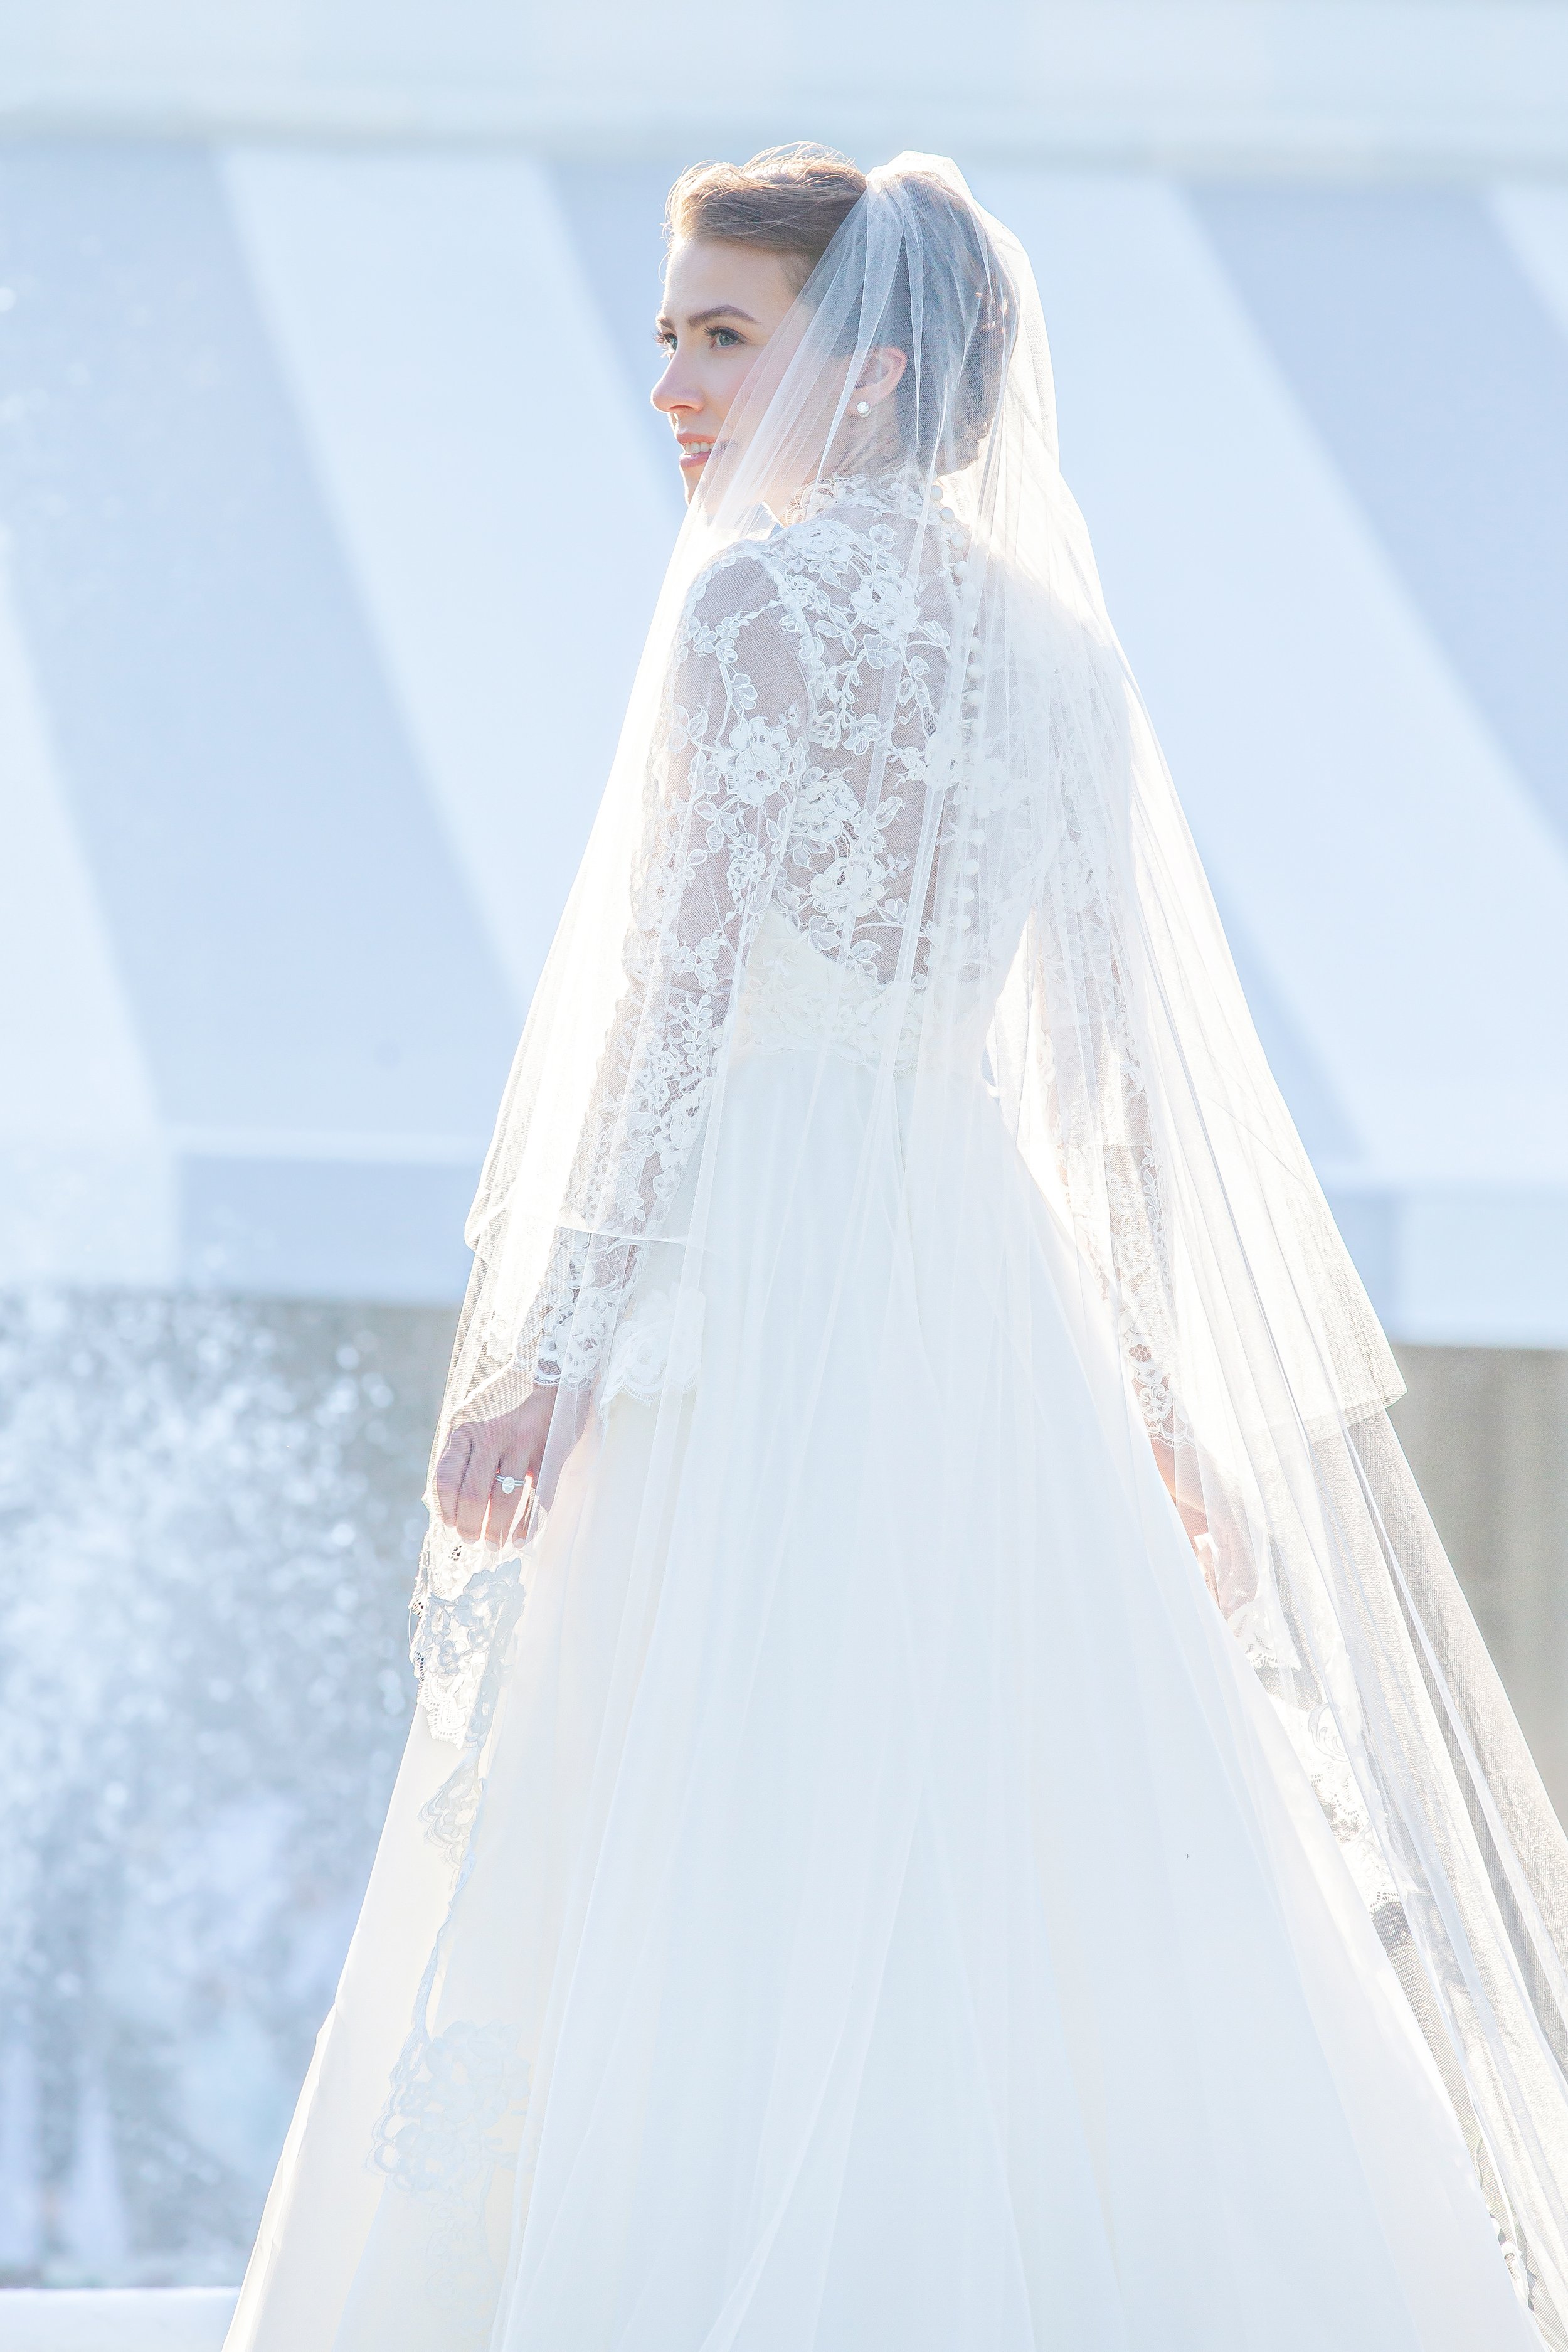 A wedding gown by Carolina Herrera